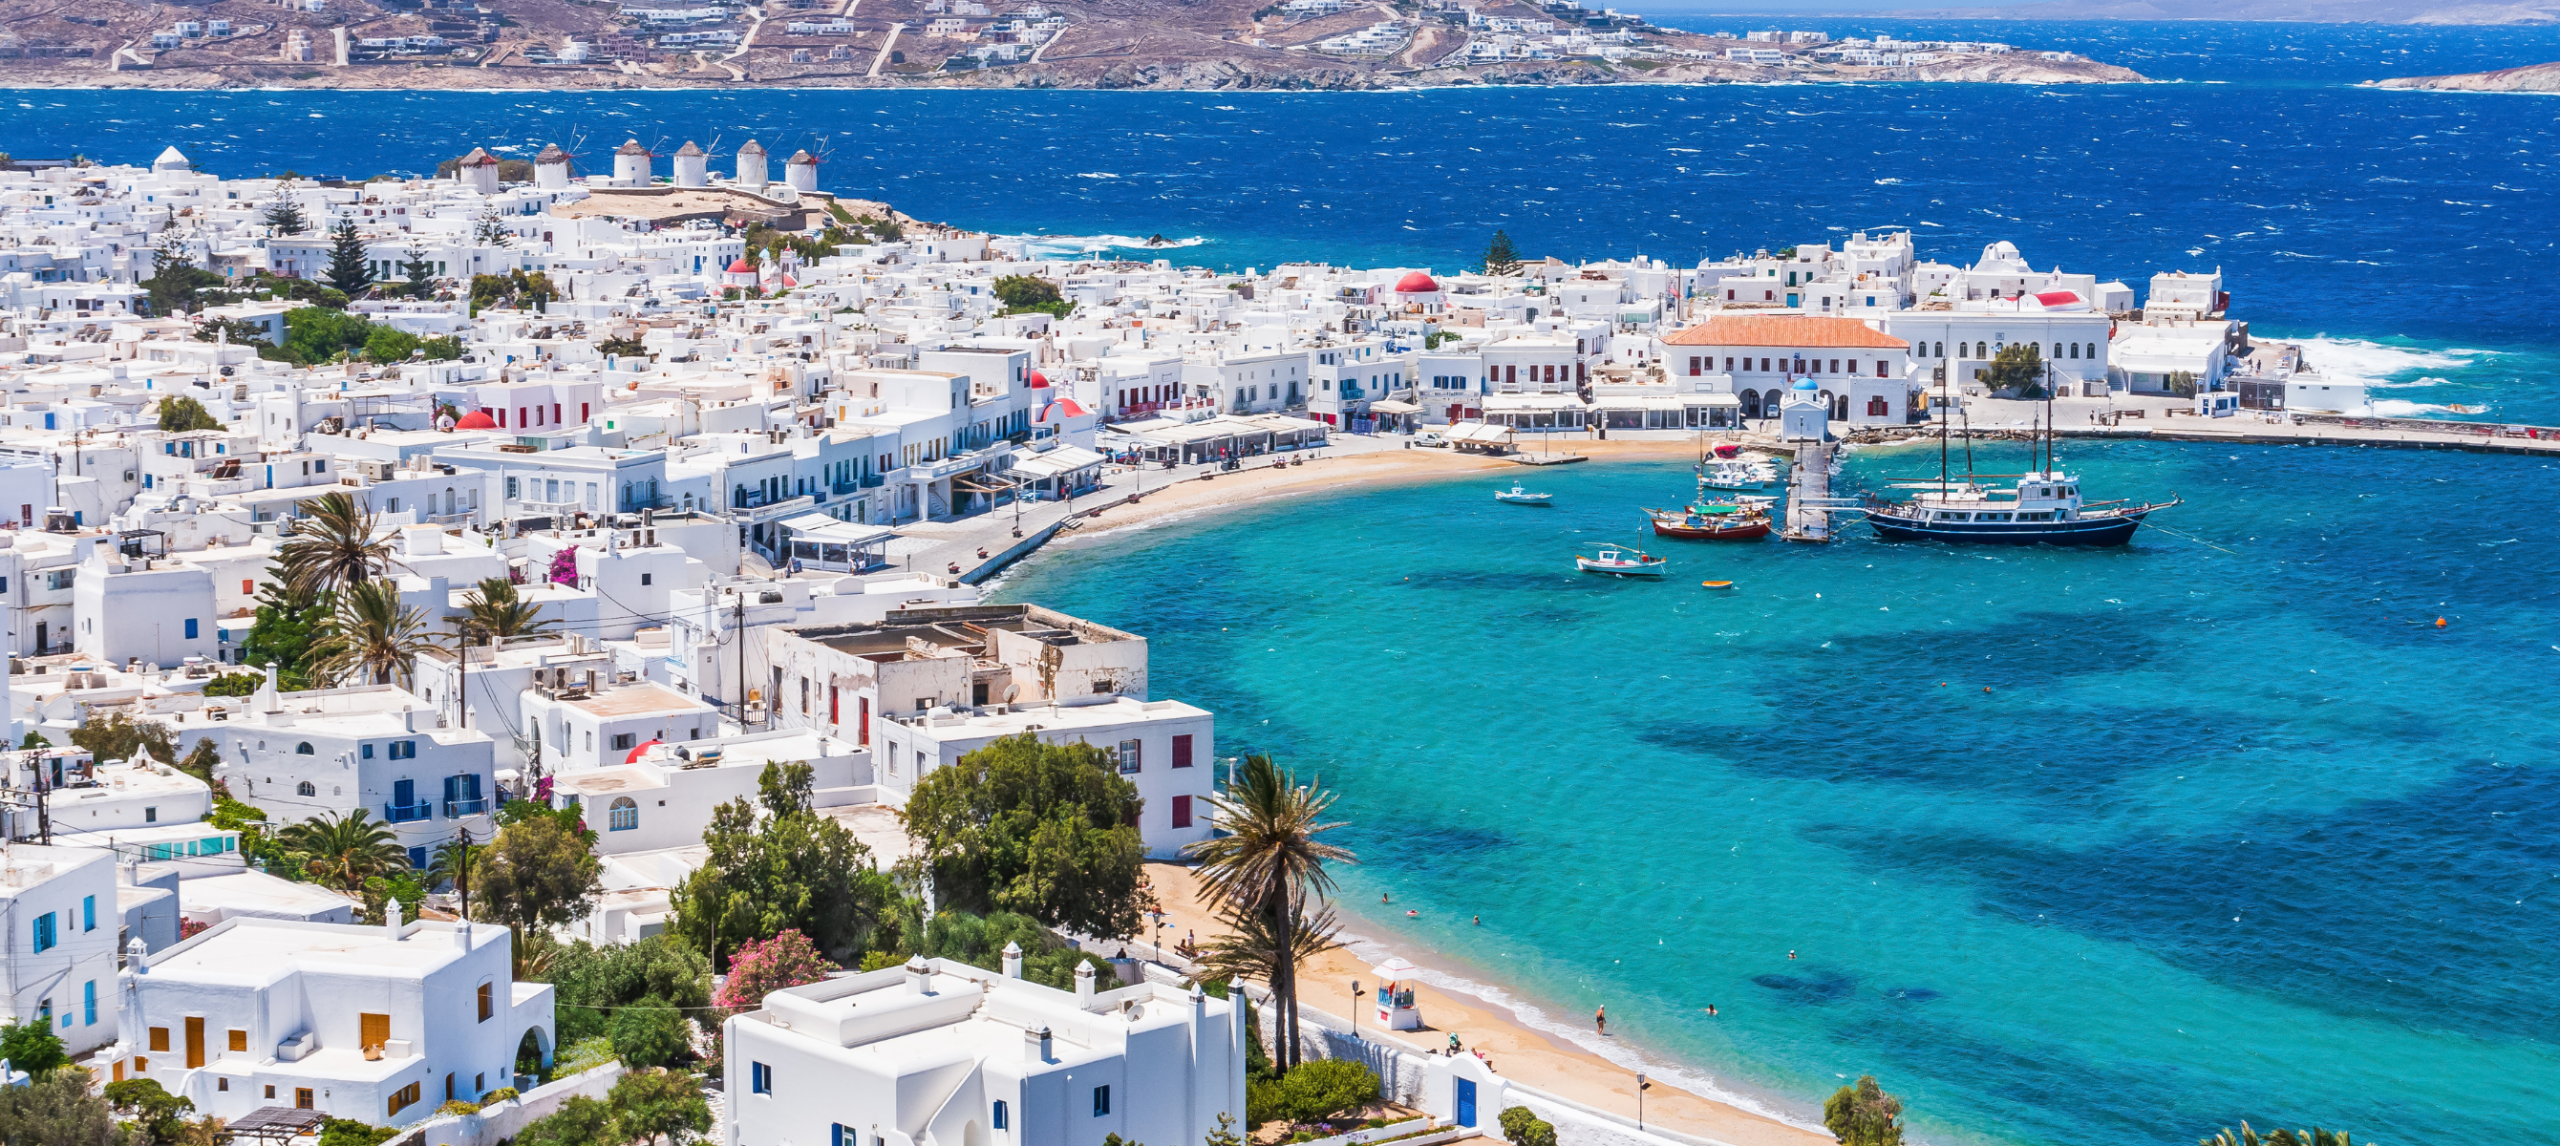 The 5 Best Hotels In Greece